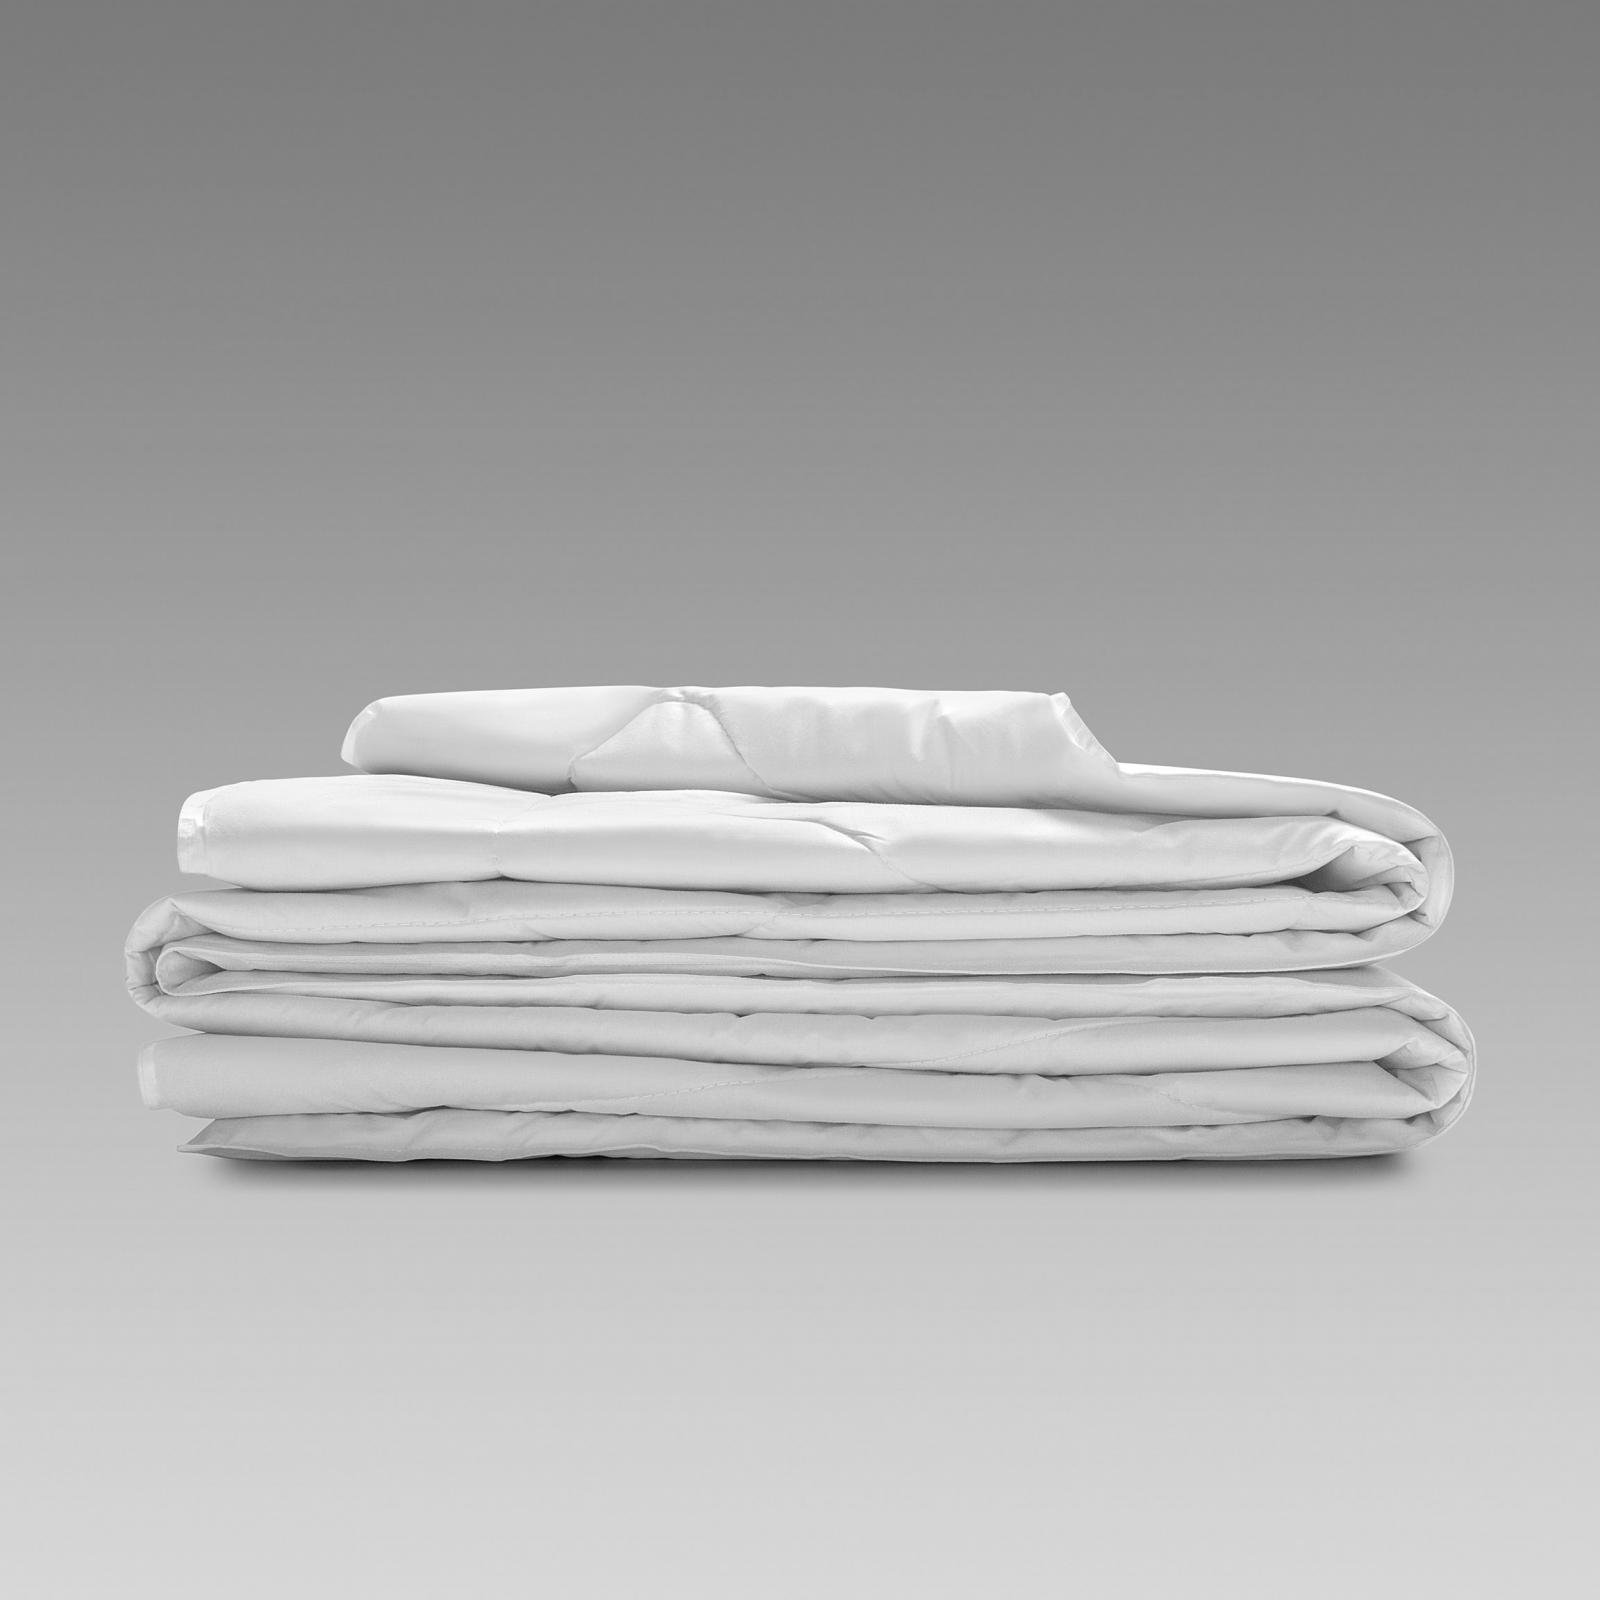 Одеяло Togas Лира (20.04.17.0092), цвет экрю, размер 200х210 см - фото 4